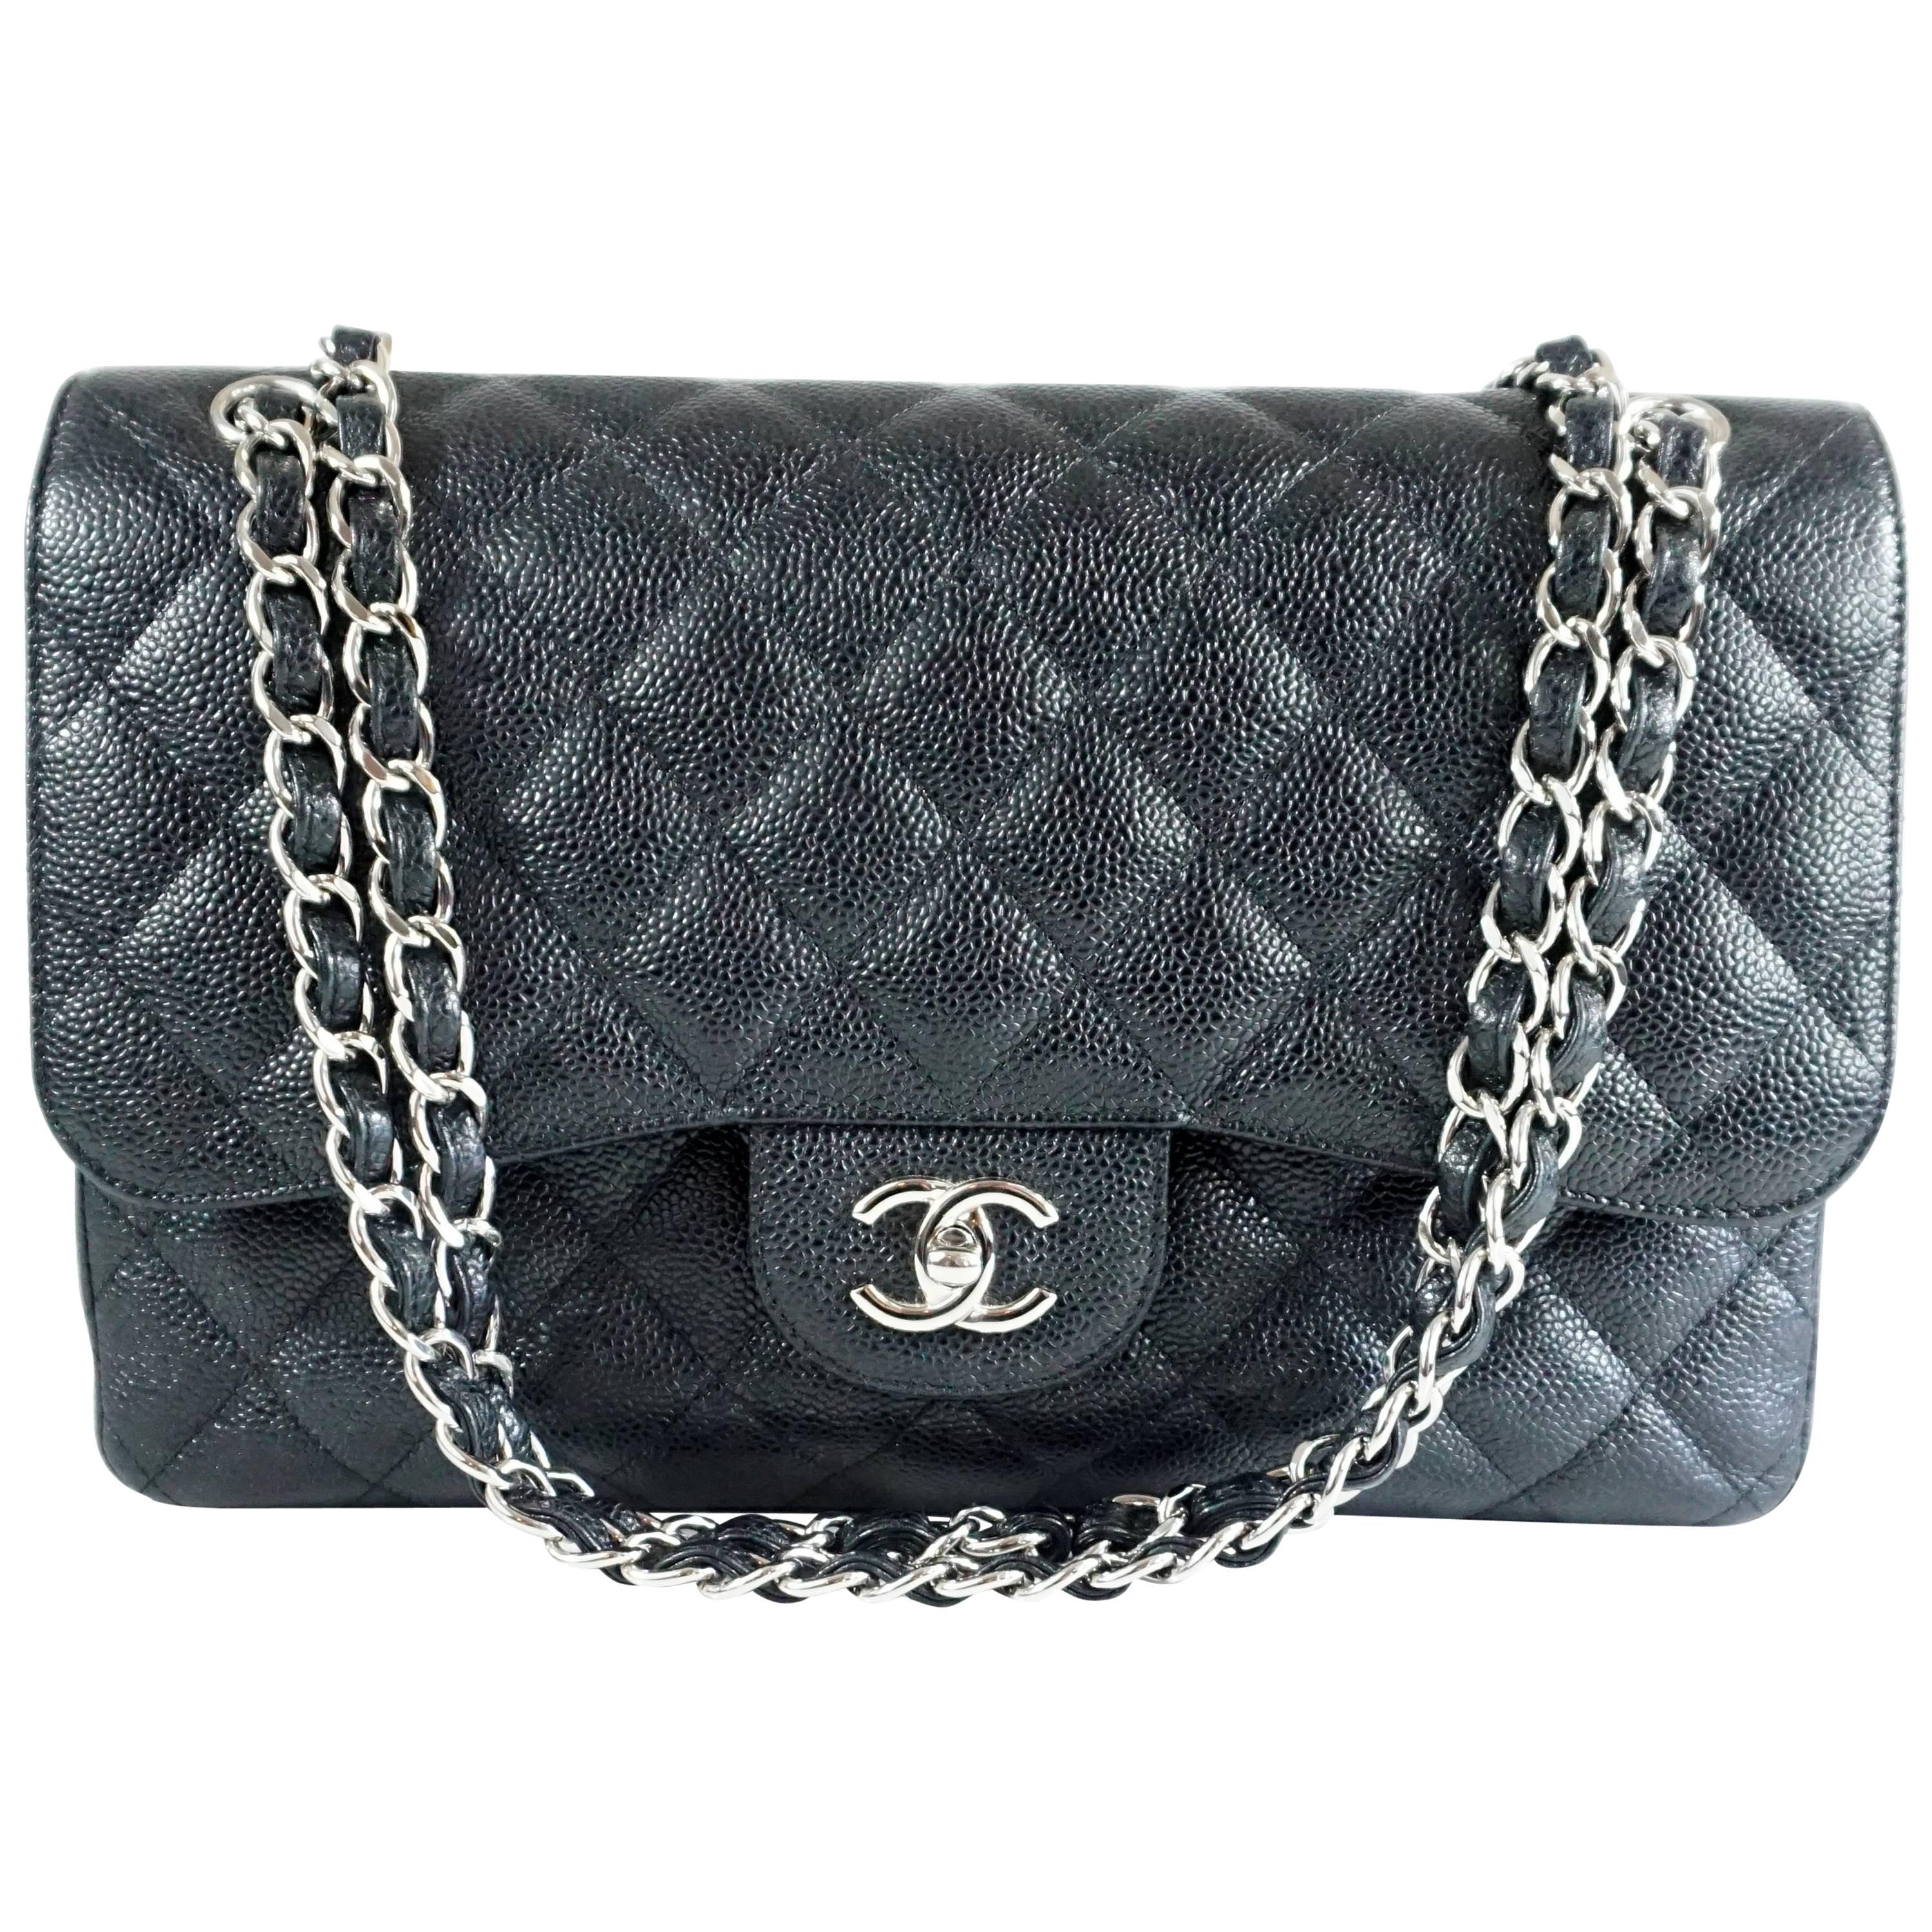 Chanel Black Caviar Jumbo Classic Handbag - SHW - 2013 